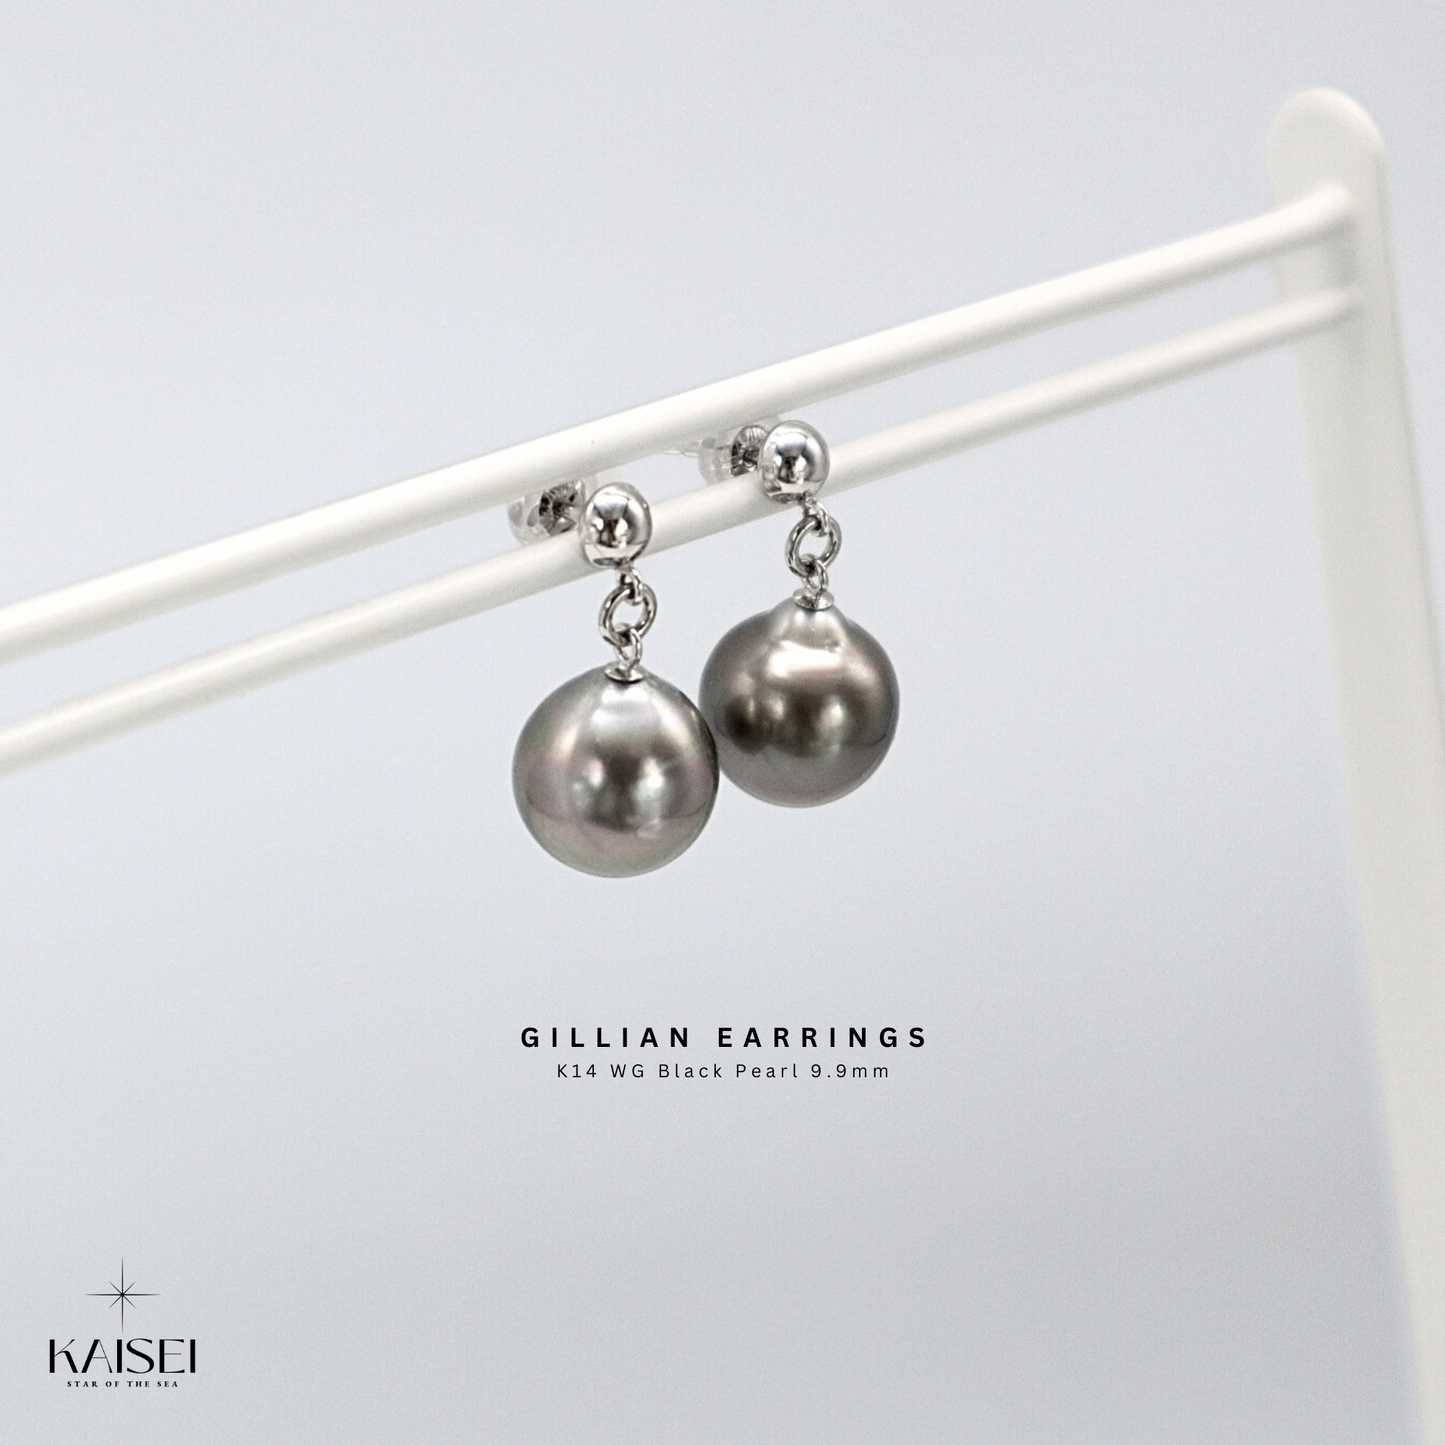 Kaisei Pearl - Gillian Earrings Black Pearl 9.9mm K14 White Gold Jewelry